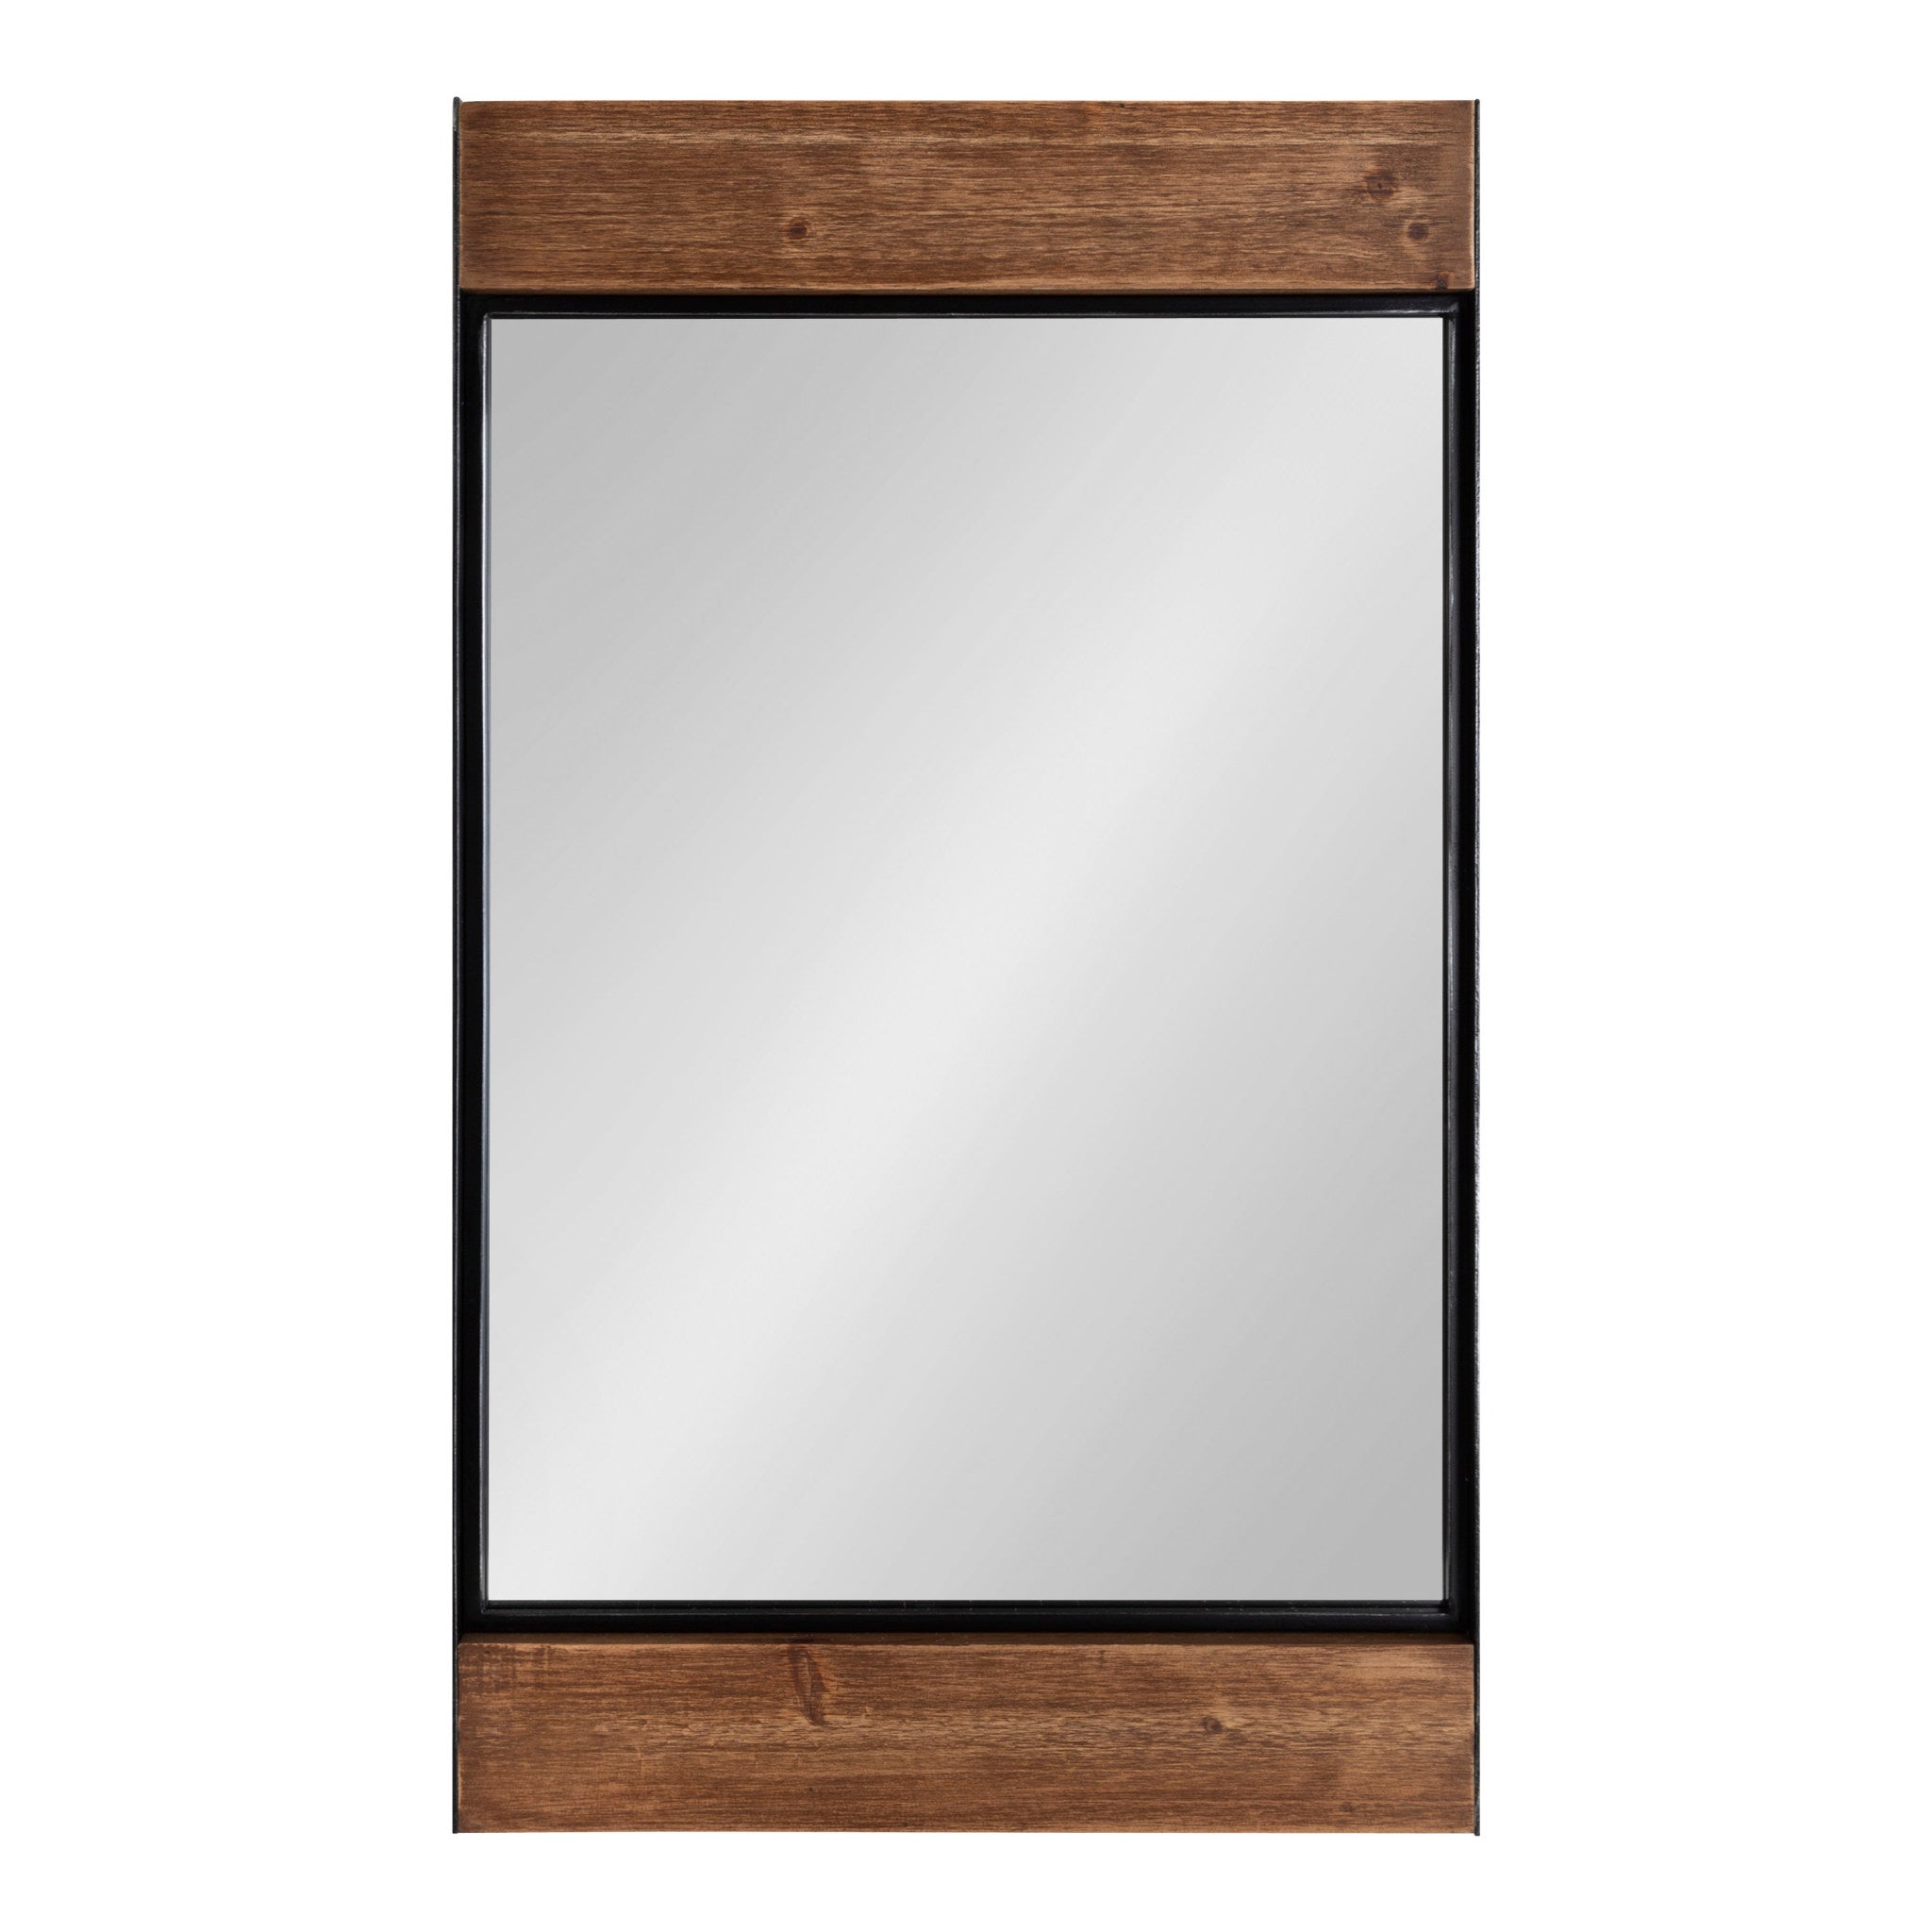 Kincaid Wood and Metal Framed Wall Mirror